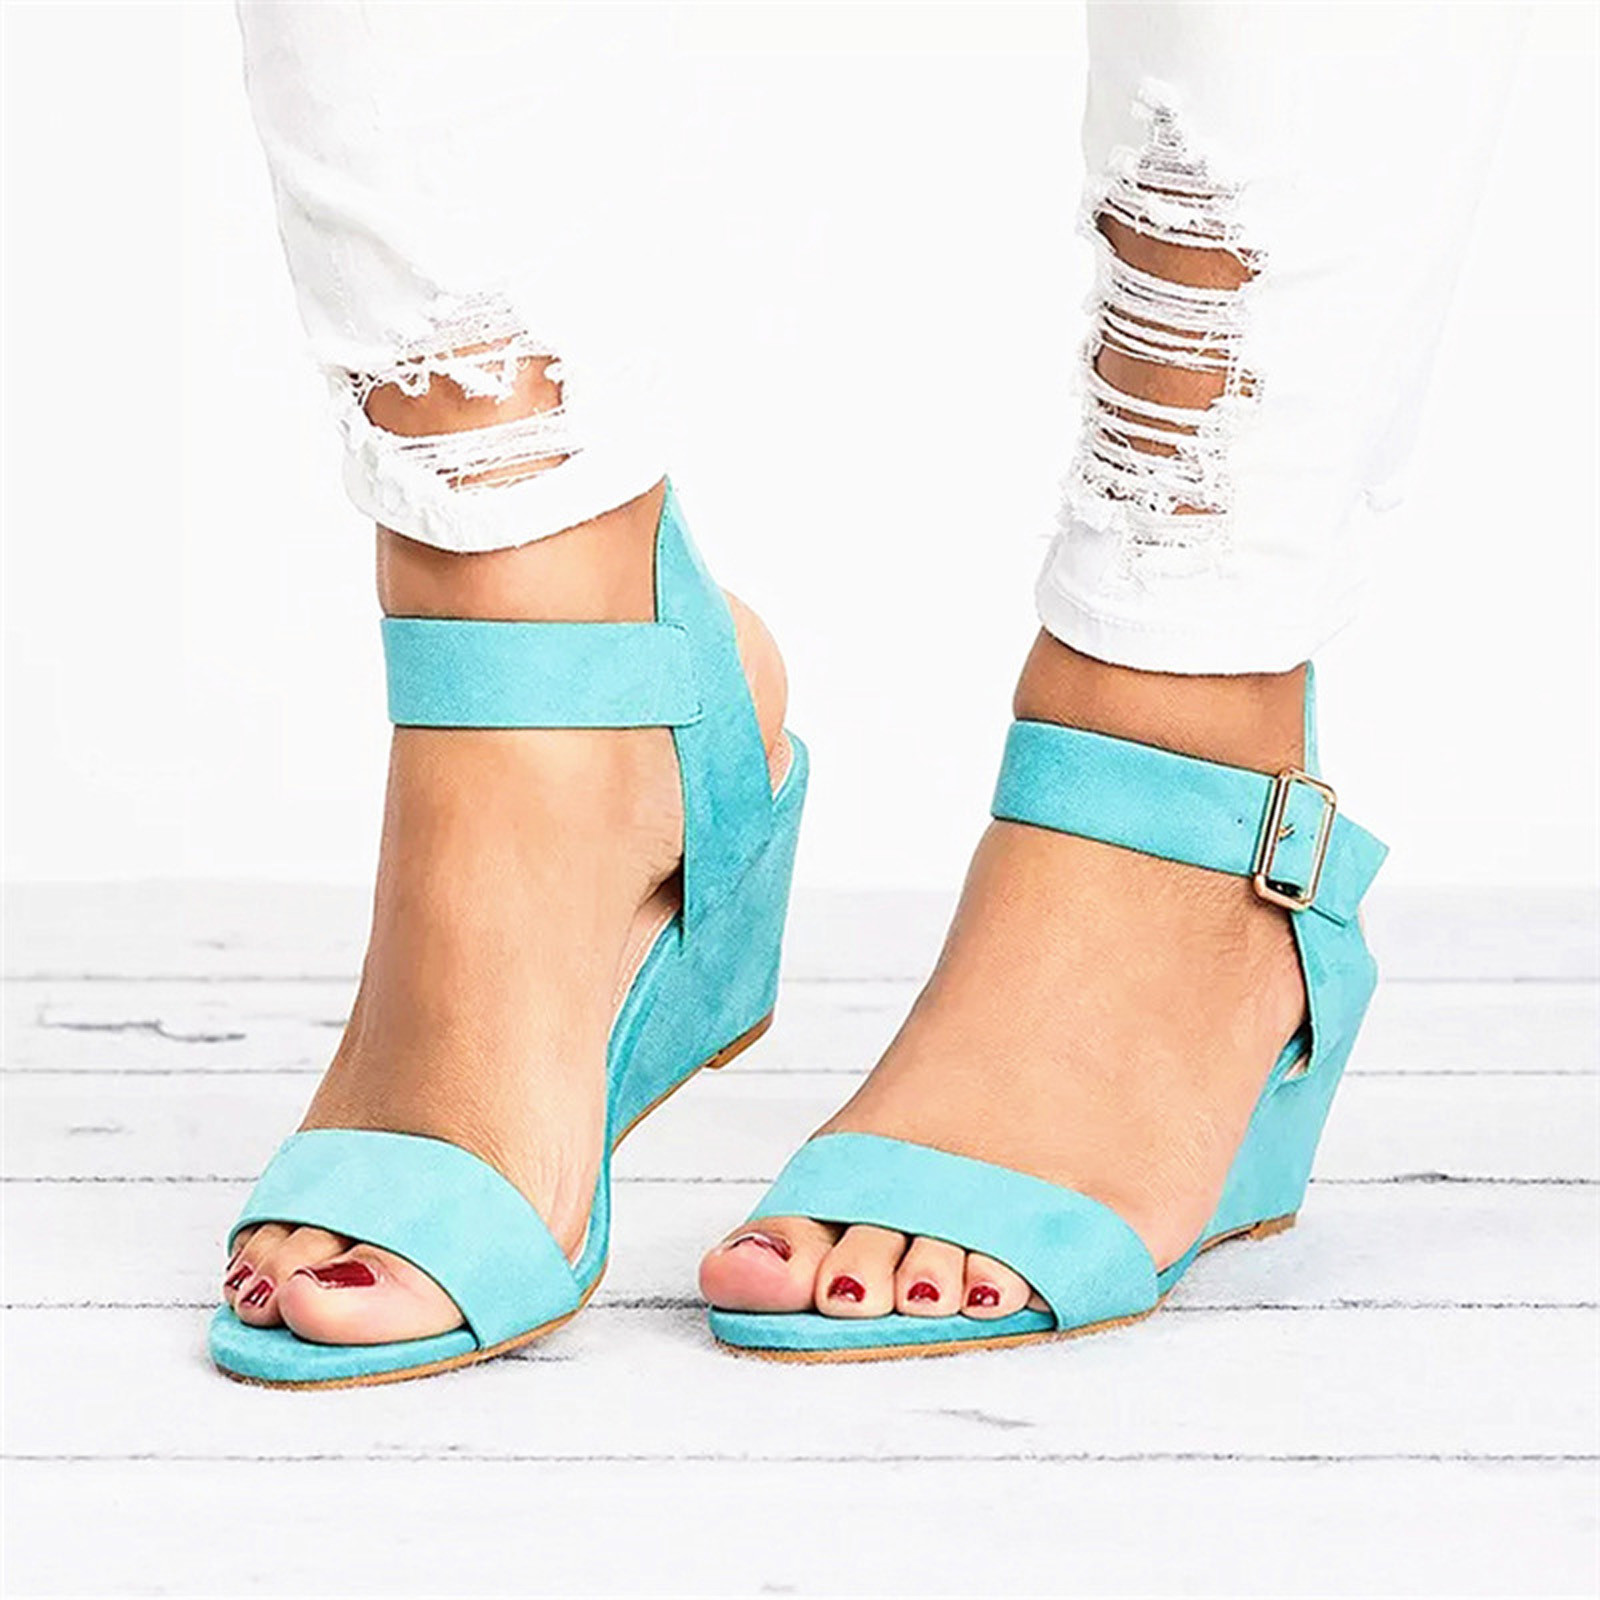 Utoimkio Wedge Sandals for Women Dressy Women's Solid Color Open Toe ...